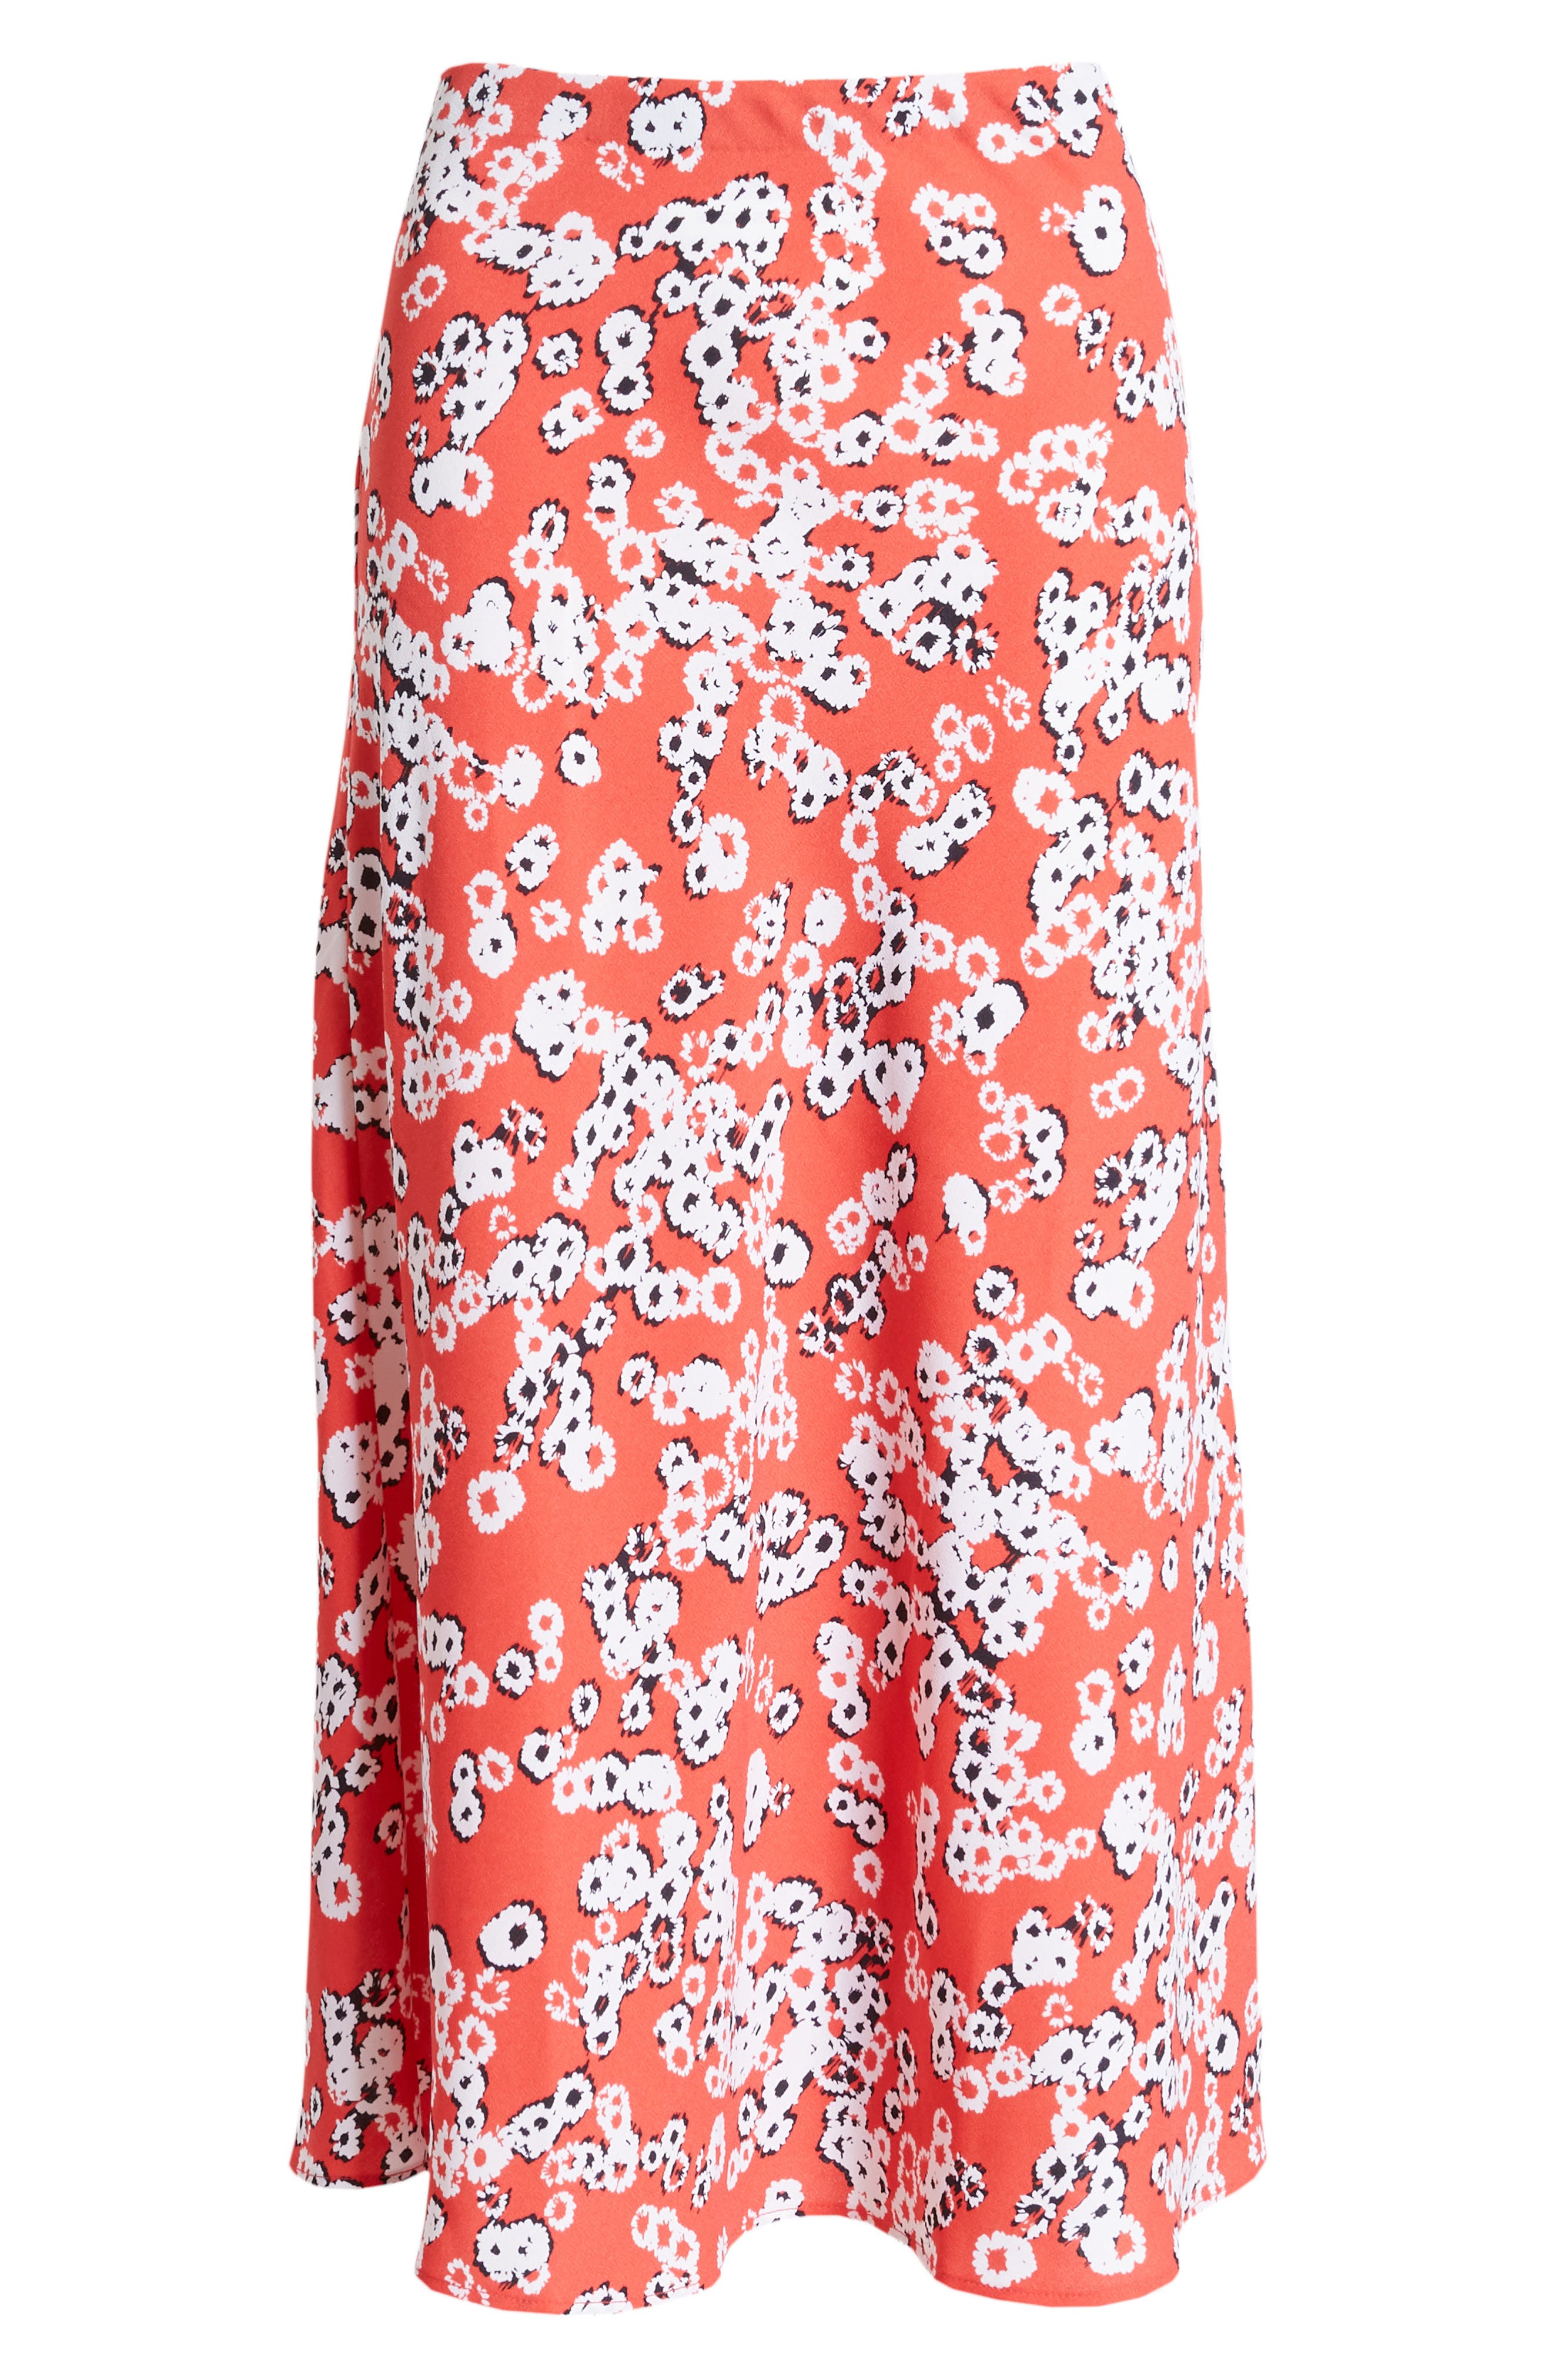 HalogenR Women's Halogen Bias Cut A-Line Skirt, Size X-Large Regular - Red  from LinkShare USA | SheFinds